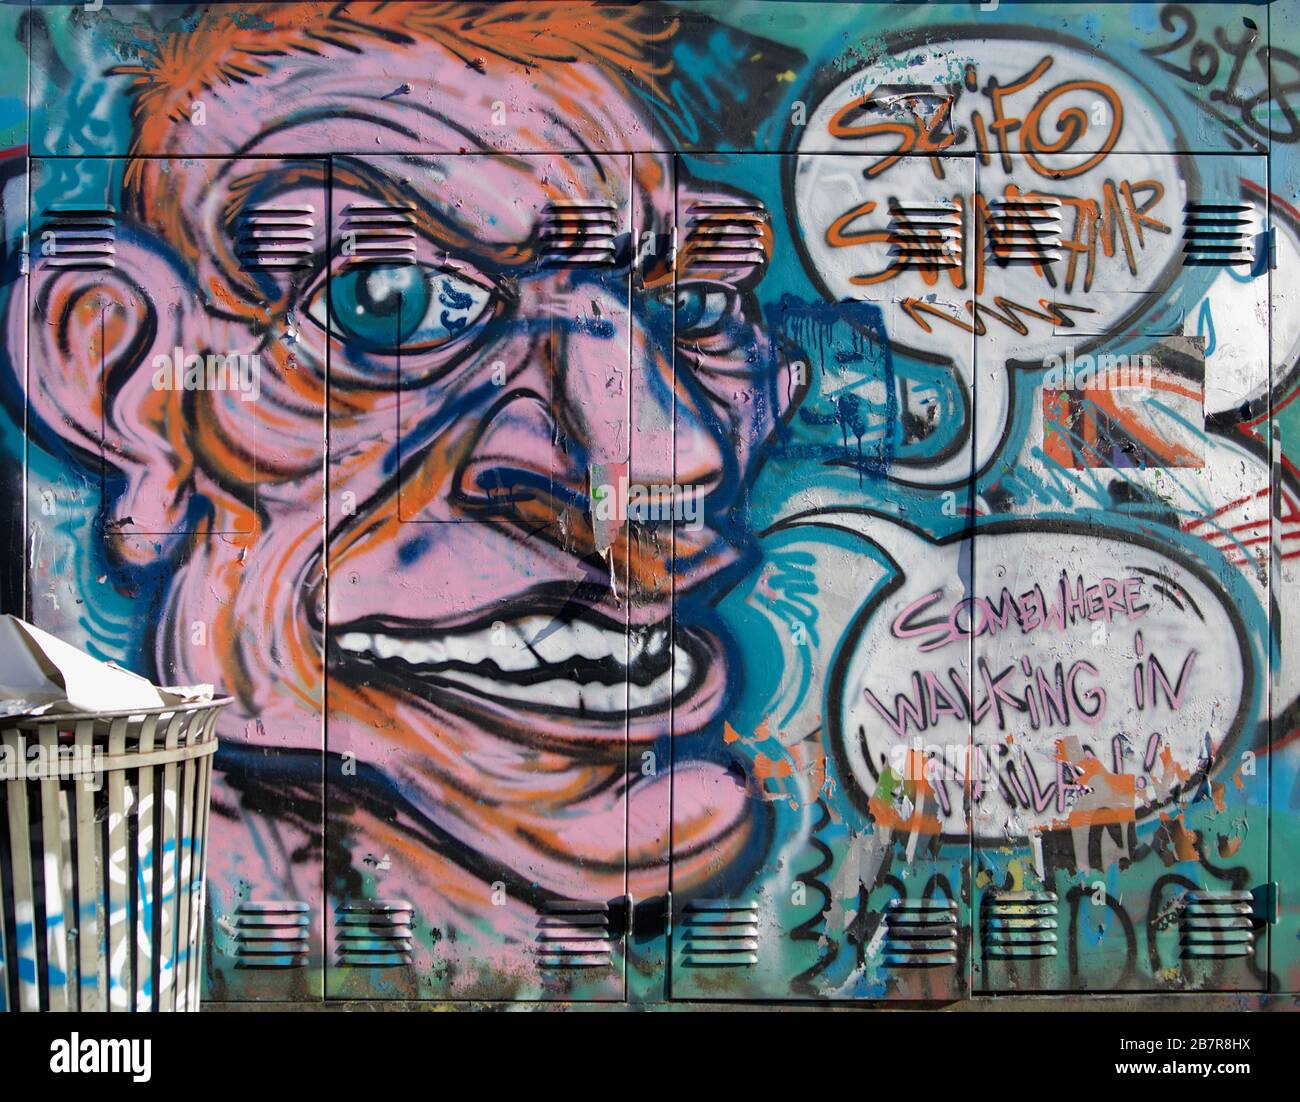 Modern graffiti in Porta Garibaldi distrect of Milan, Italy, depicting caricatures of a man's face while talking. Stock Photo